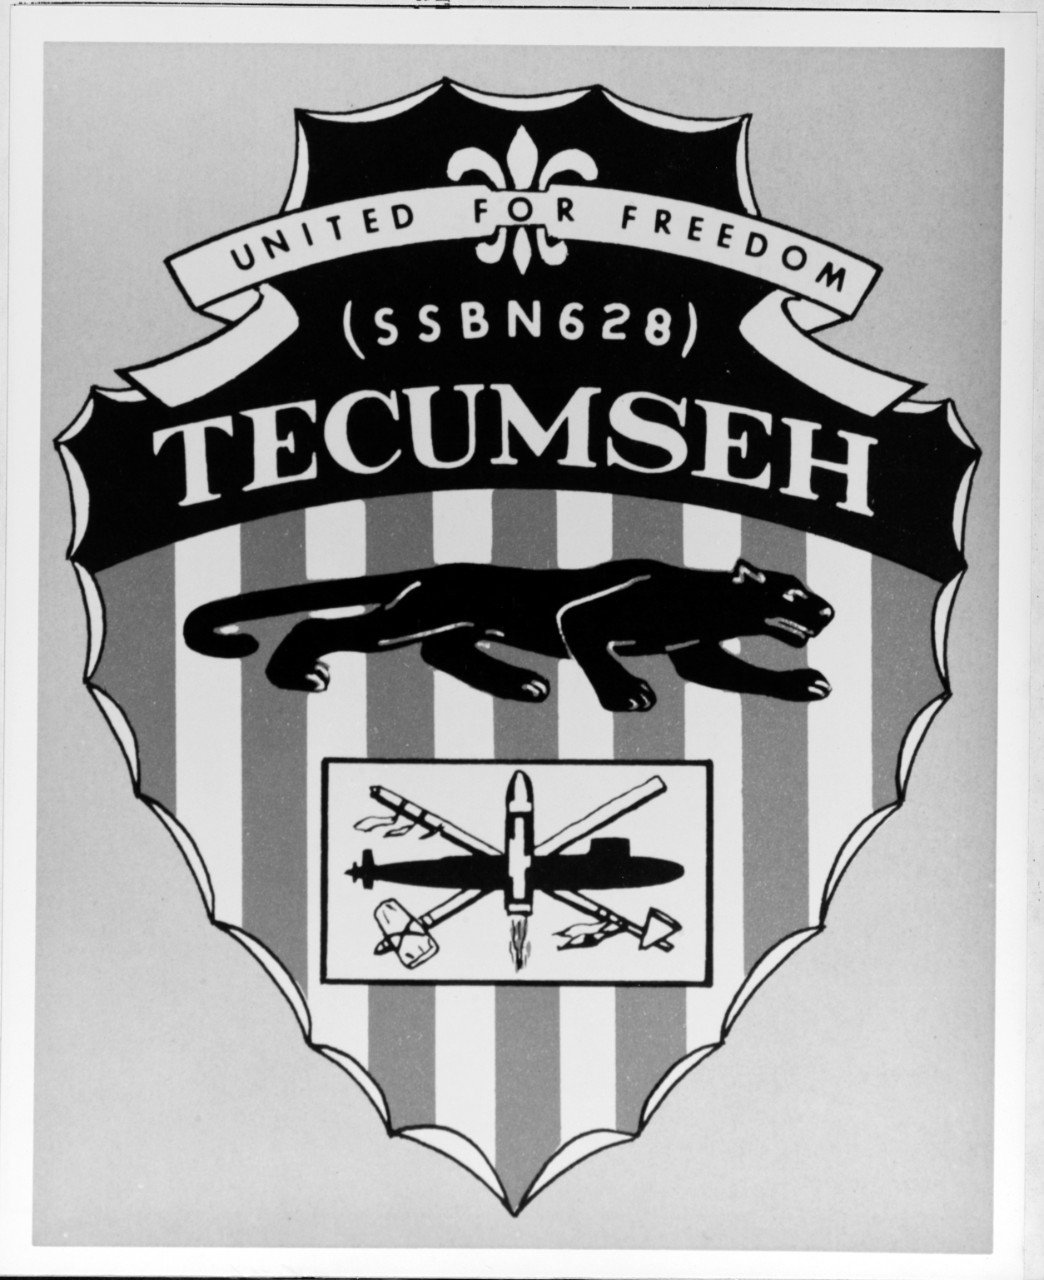 Insignia: USS TECUMSEH (SSBN-628)